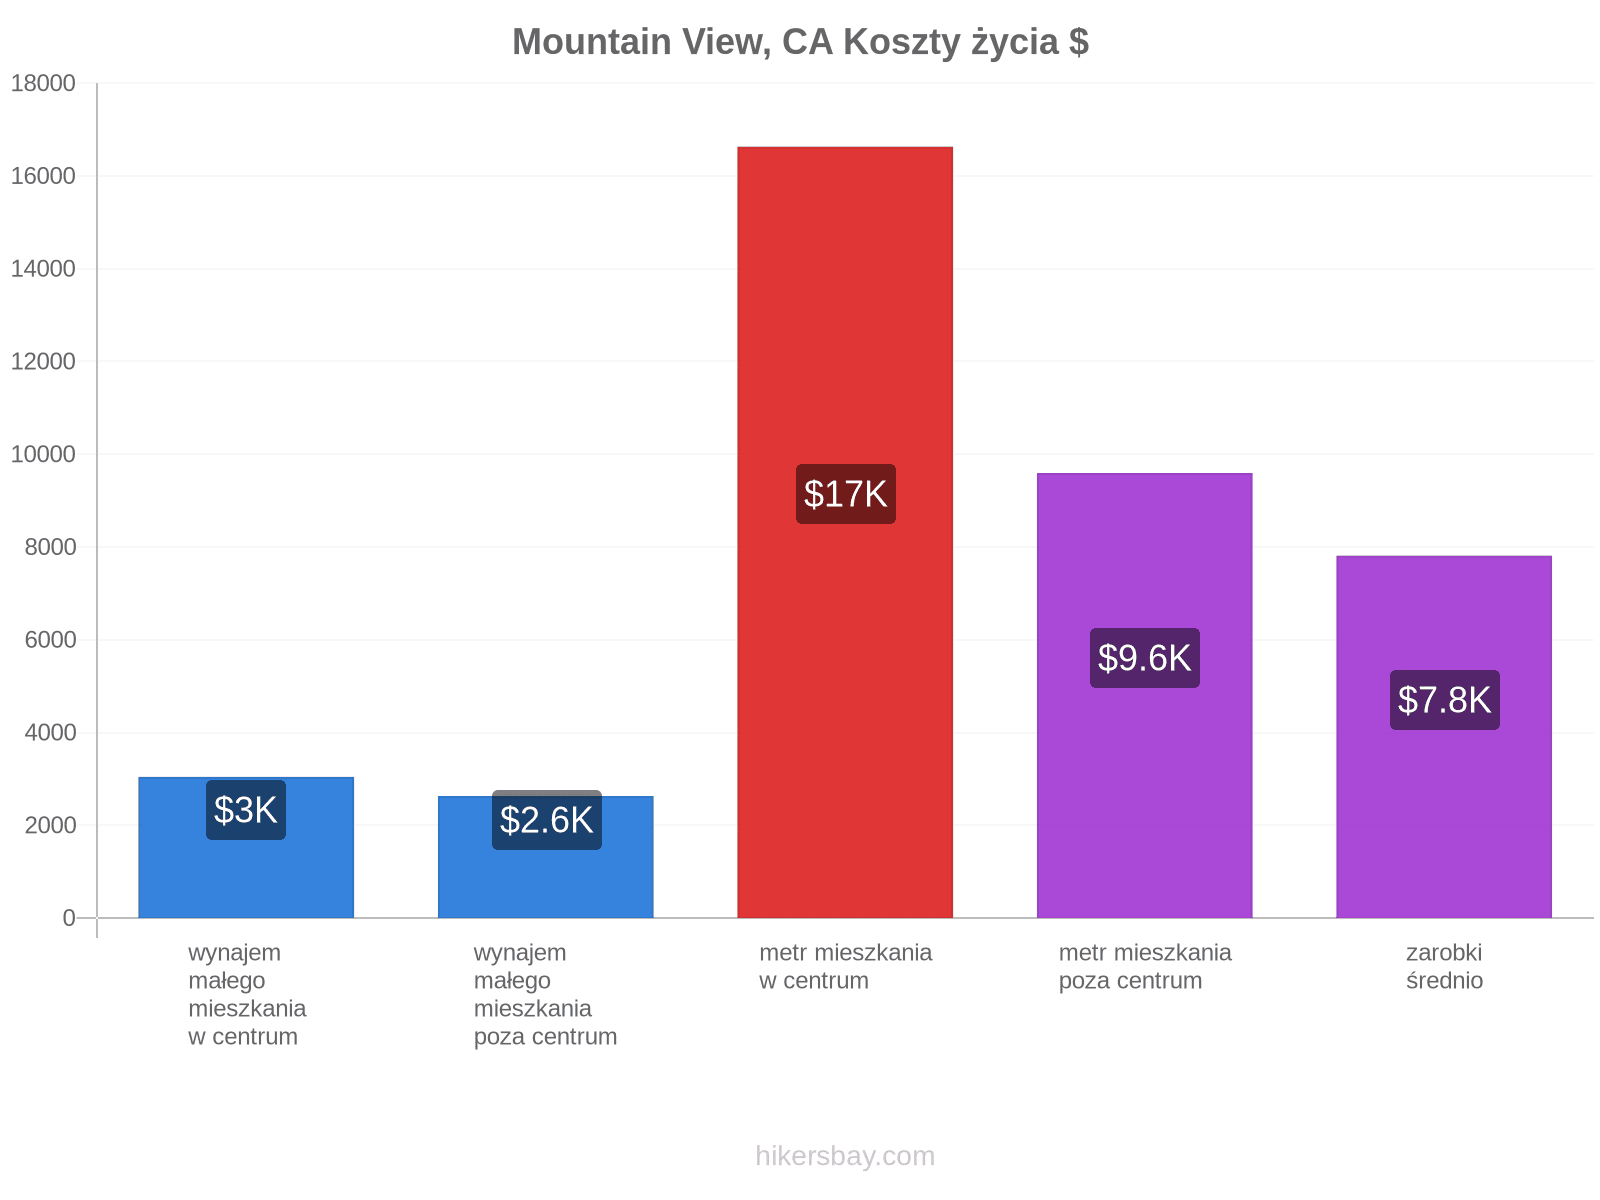 Mountain View, CA koszty życia hikersbay.com